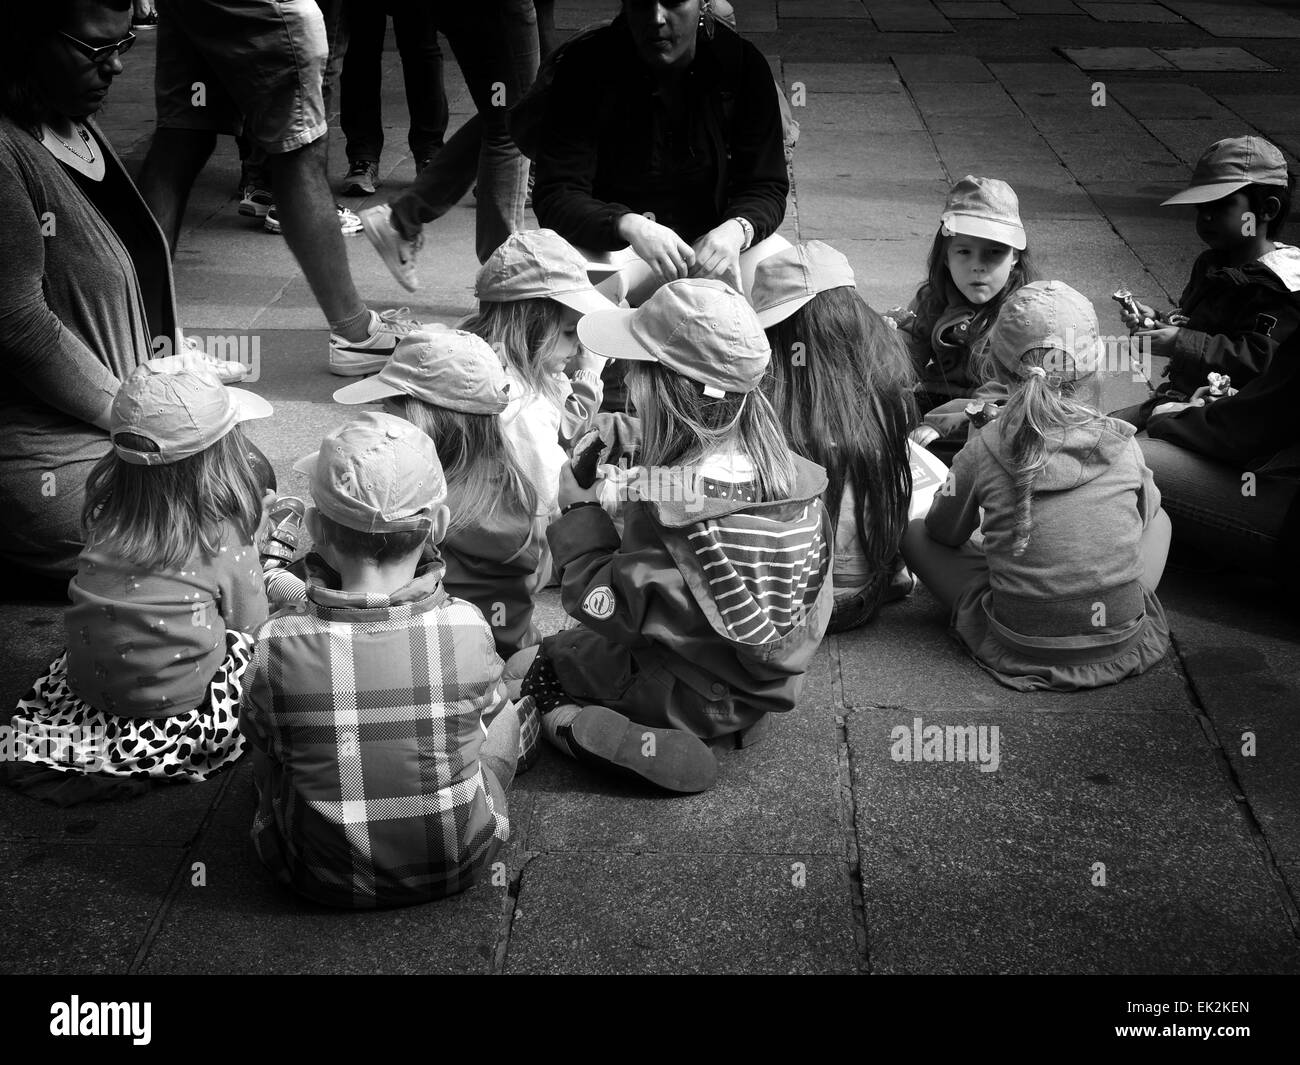 Germania Monaco di Baviera Marienplatz Kindergarten Kids sul pavimento avente panini pranzo Foto Stock